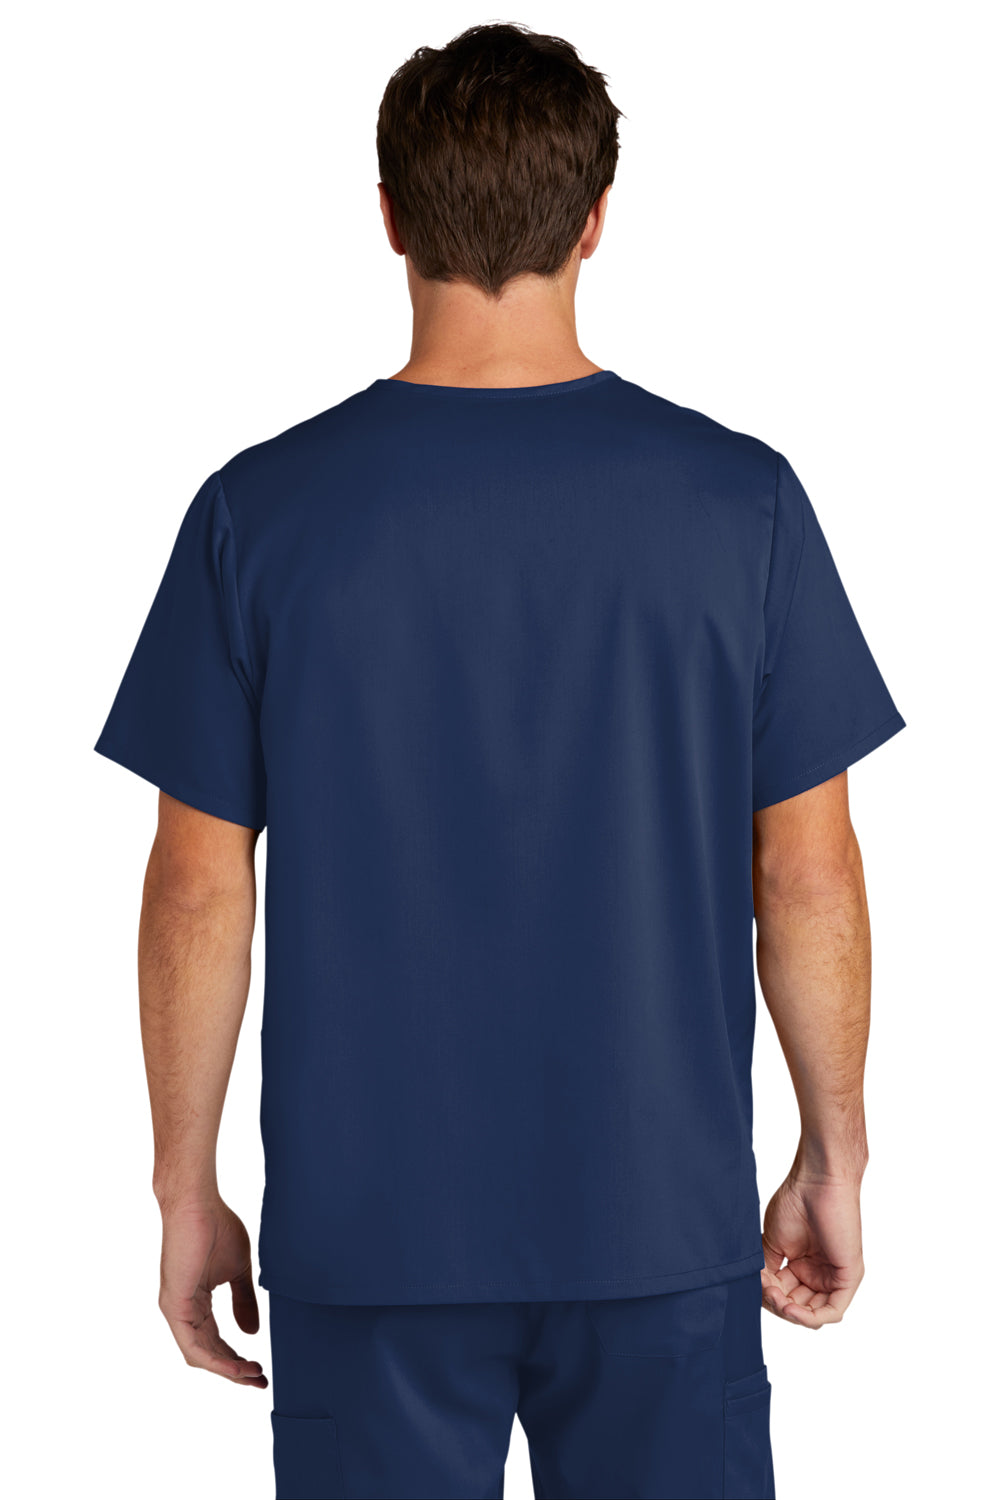 Wonderwink WW5068 Premiere Flex Short Sleeve V-Neck Shirt Navy Blue Back